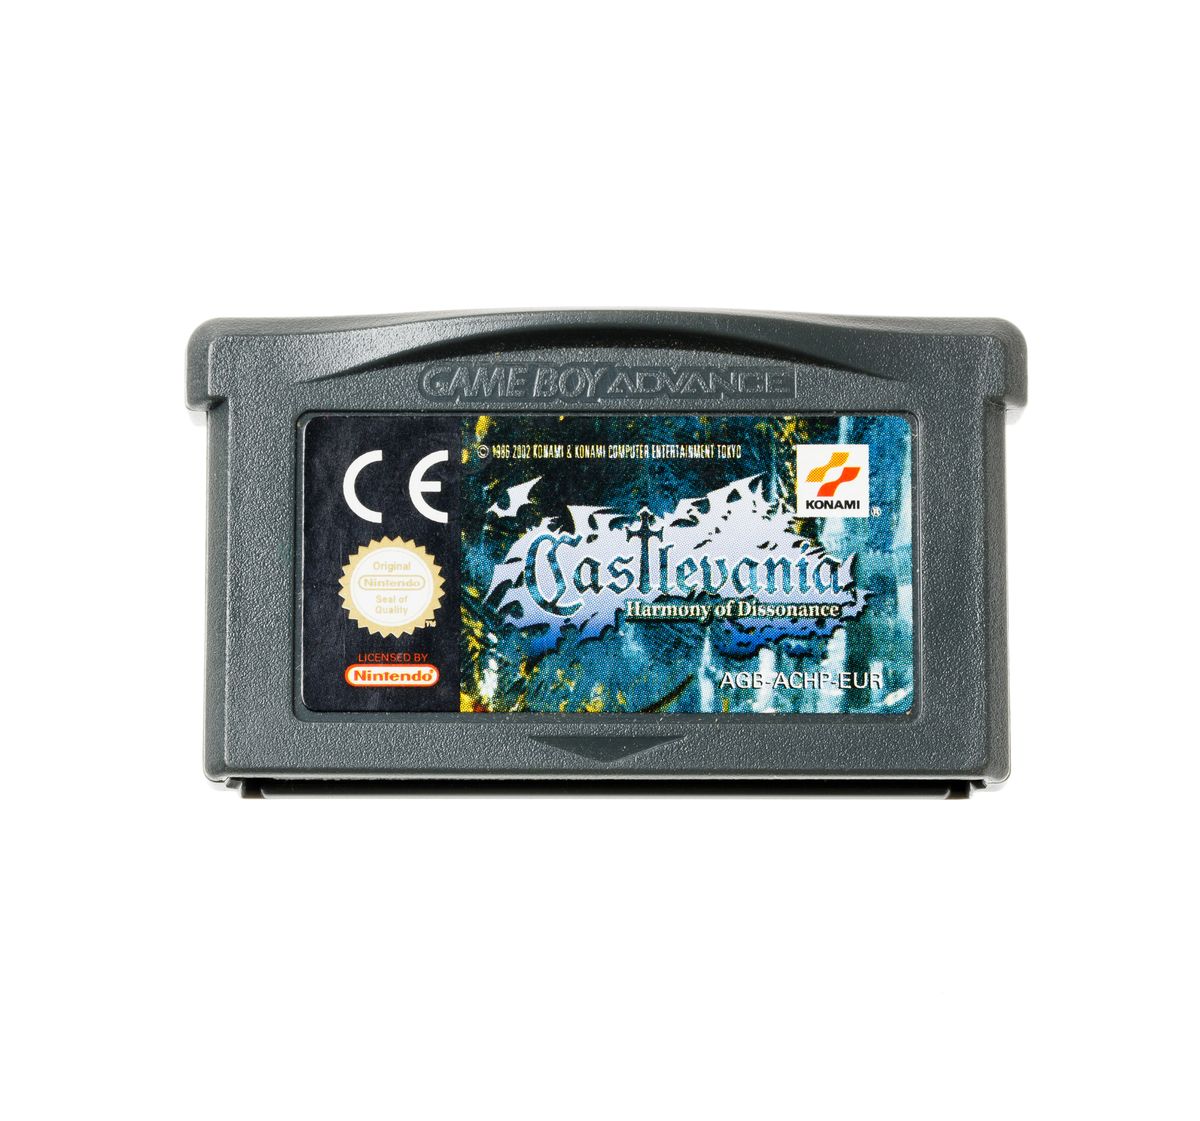 Castlevania Harmony of Dissonance - Gameboy Advance Games